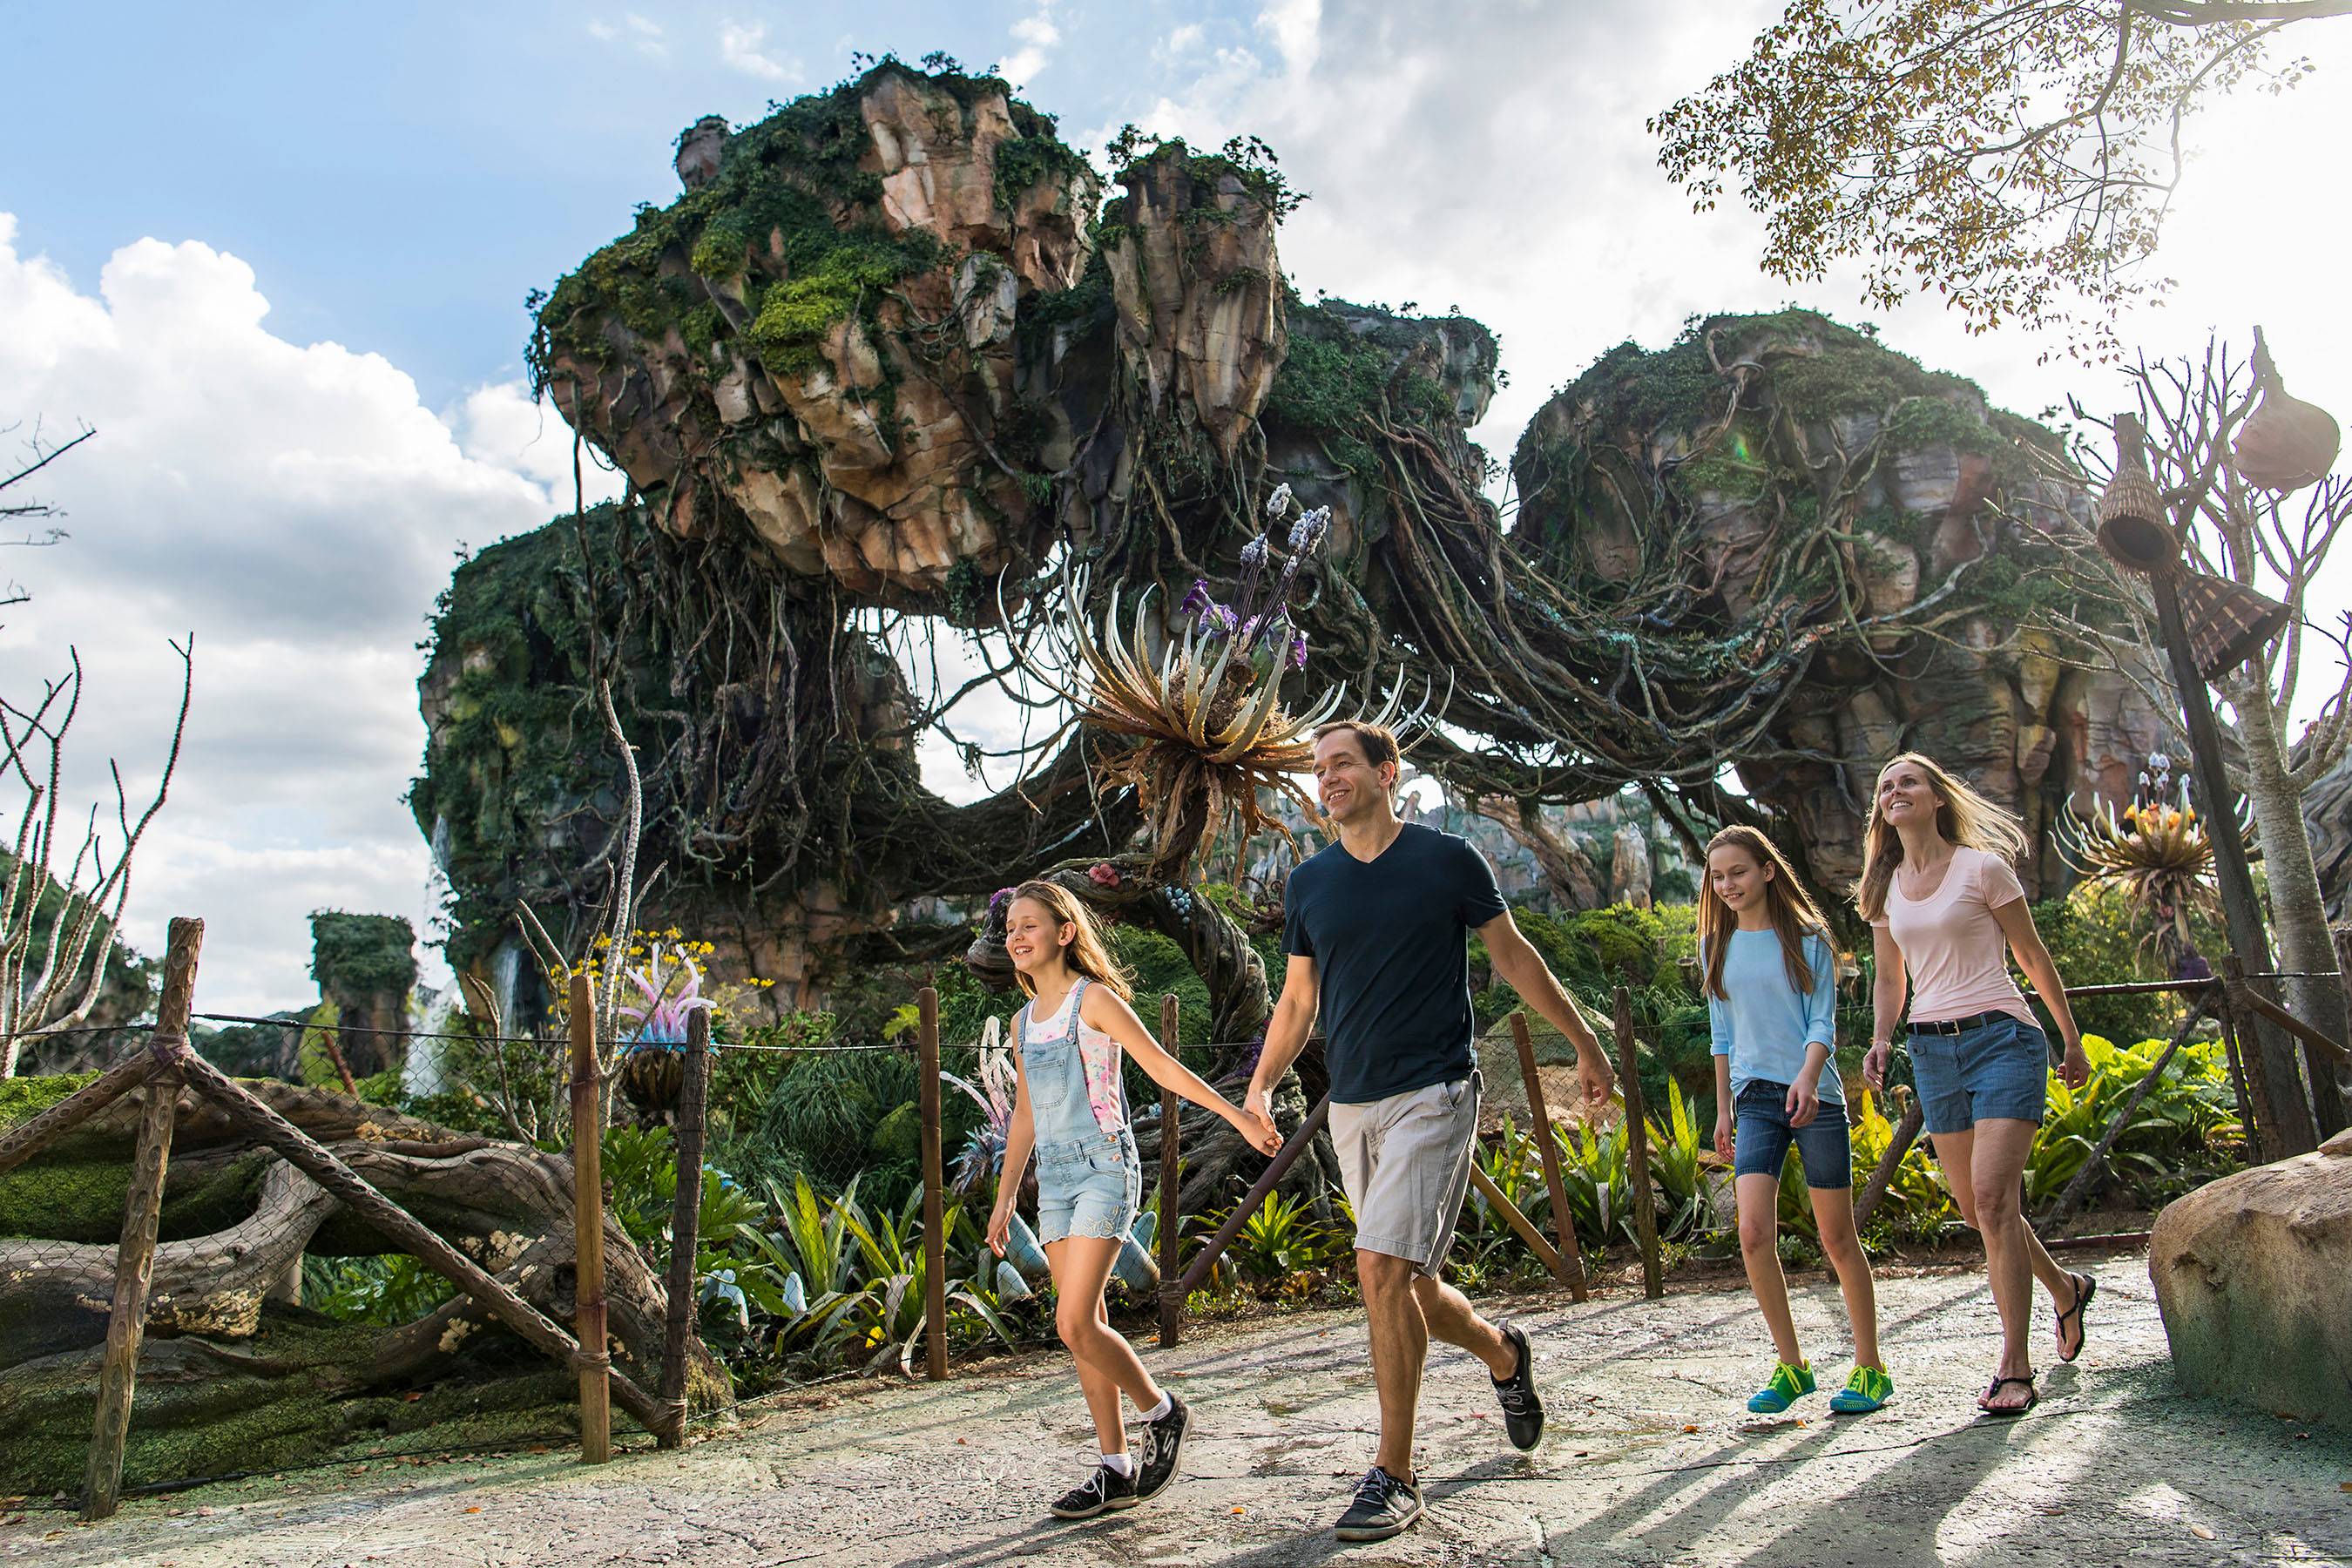 Inside Pandora - The World of Avatar. Copyright 2017 The Walt Disney Company